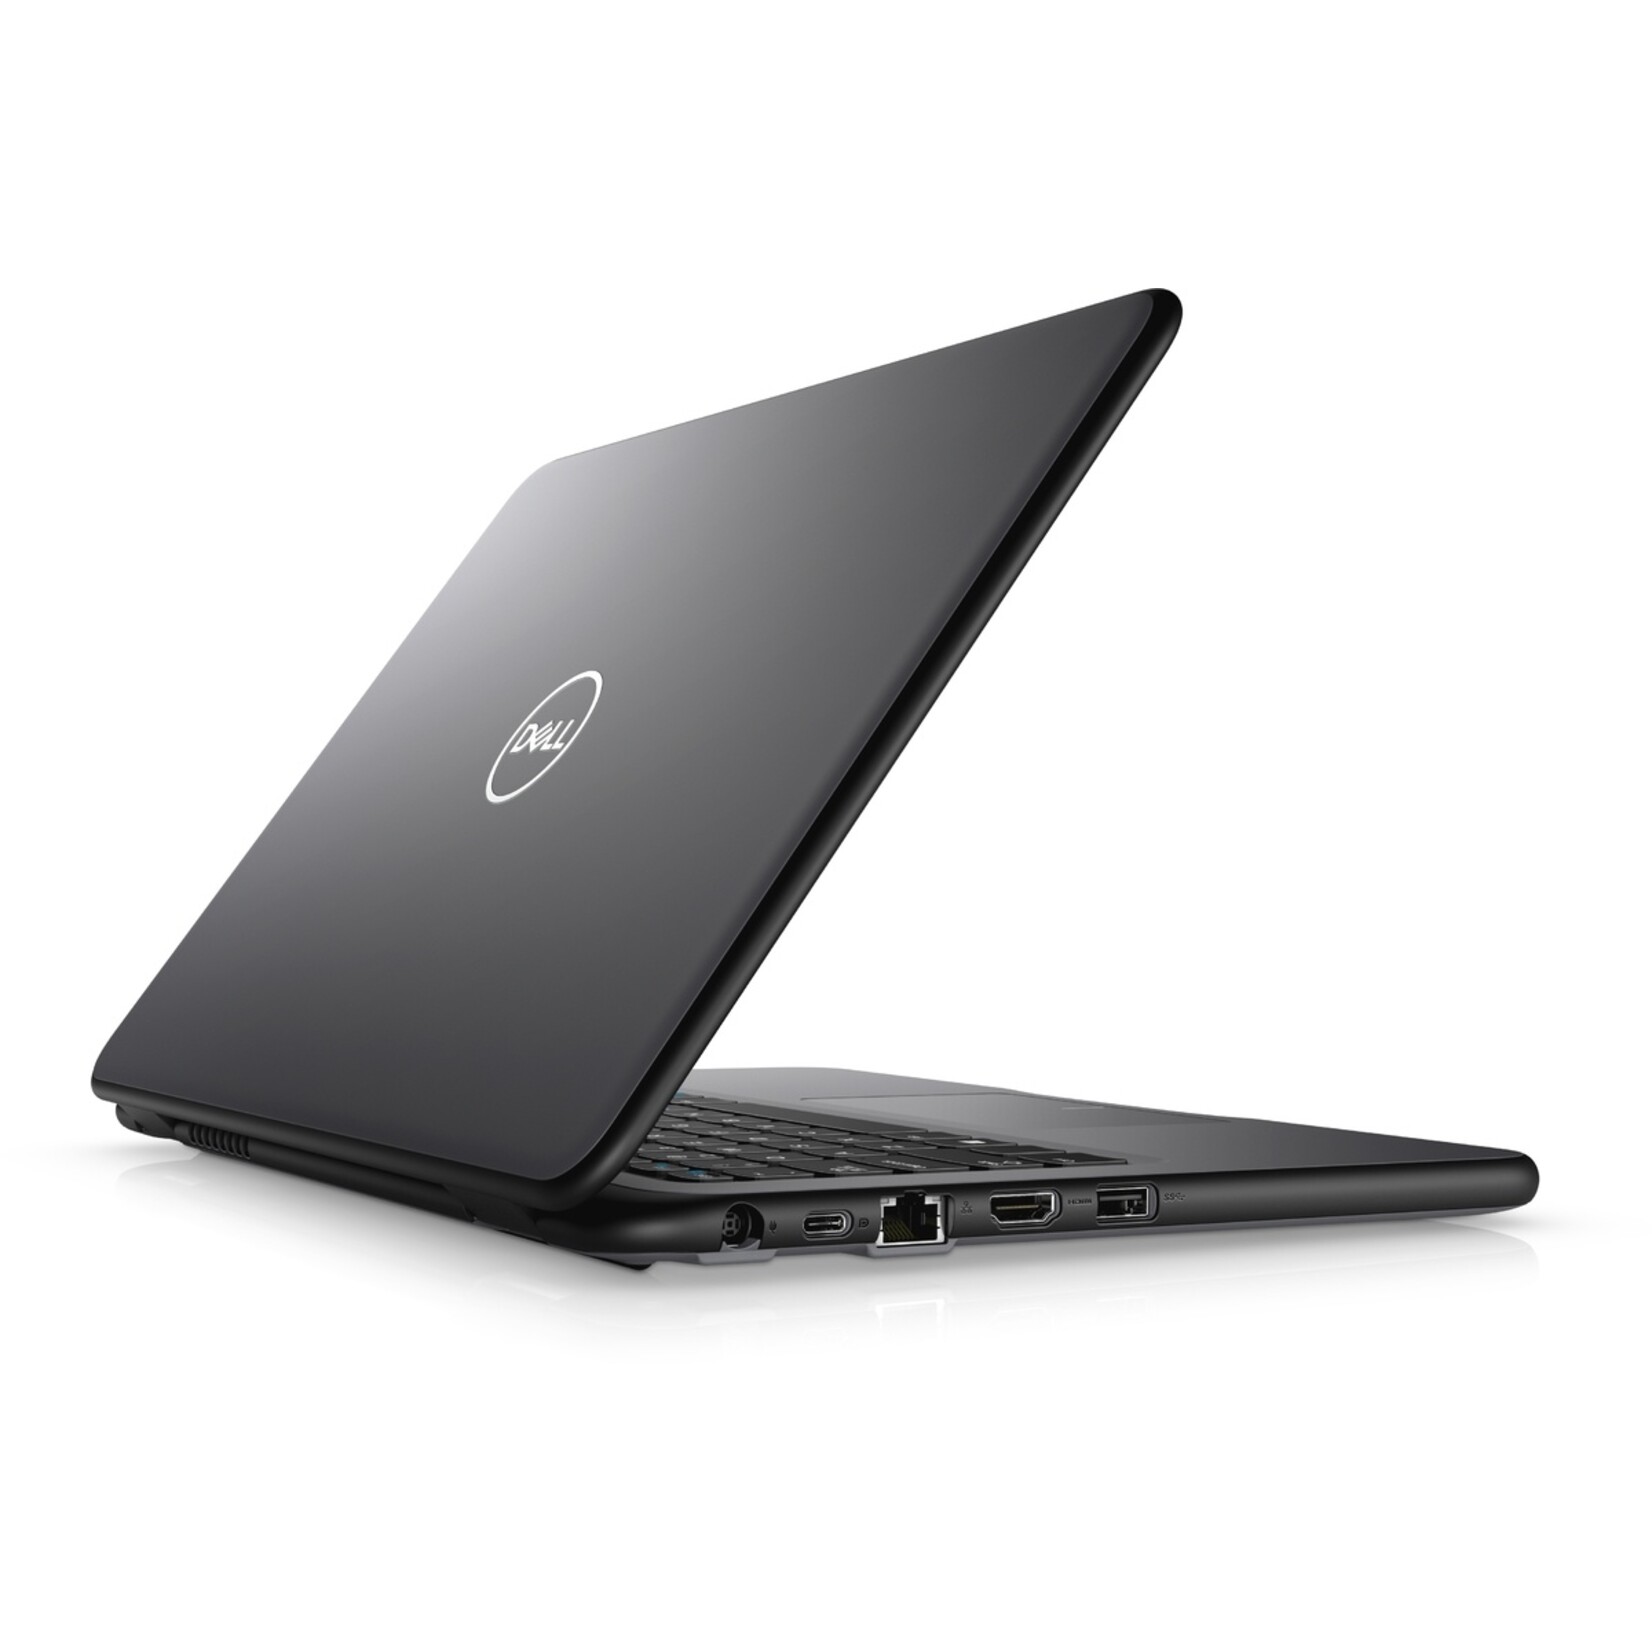 Dell Dell Latitude 3310 Refurbished Laptop - Gratis Cursus Digitale Vaardigheden